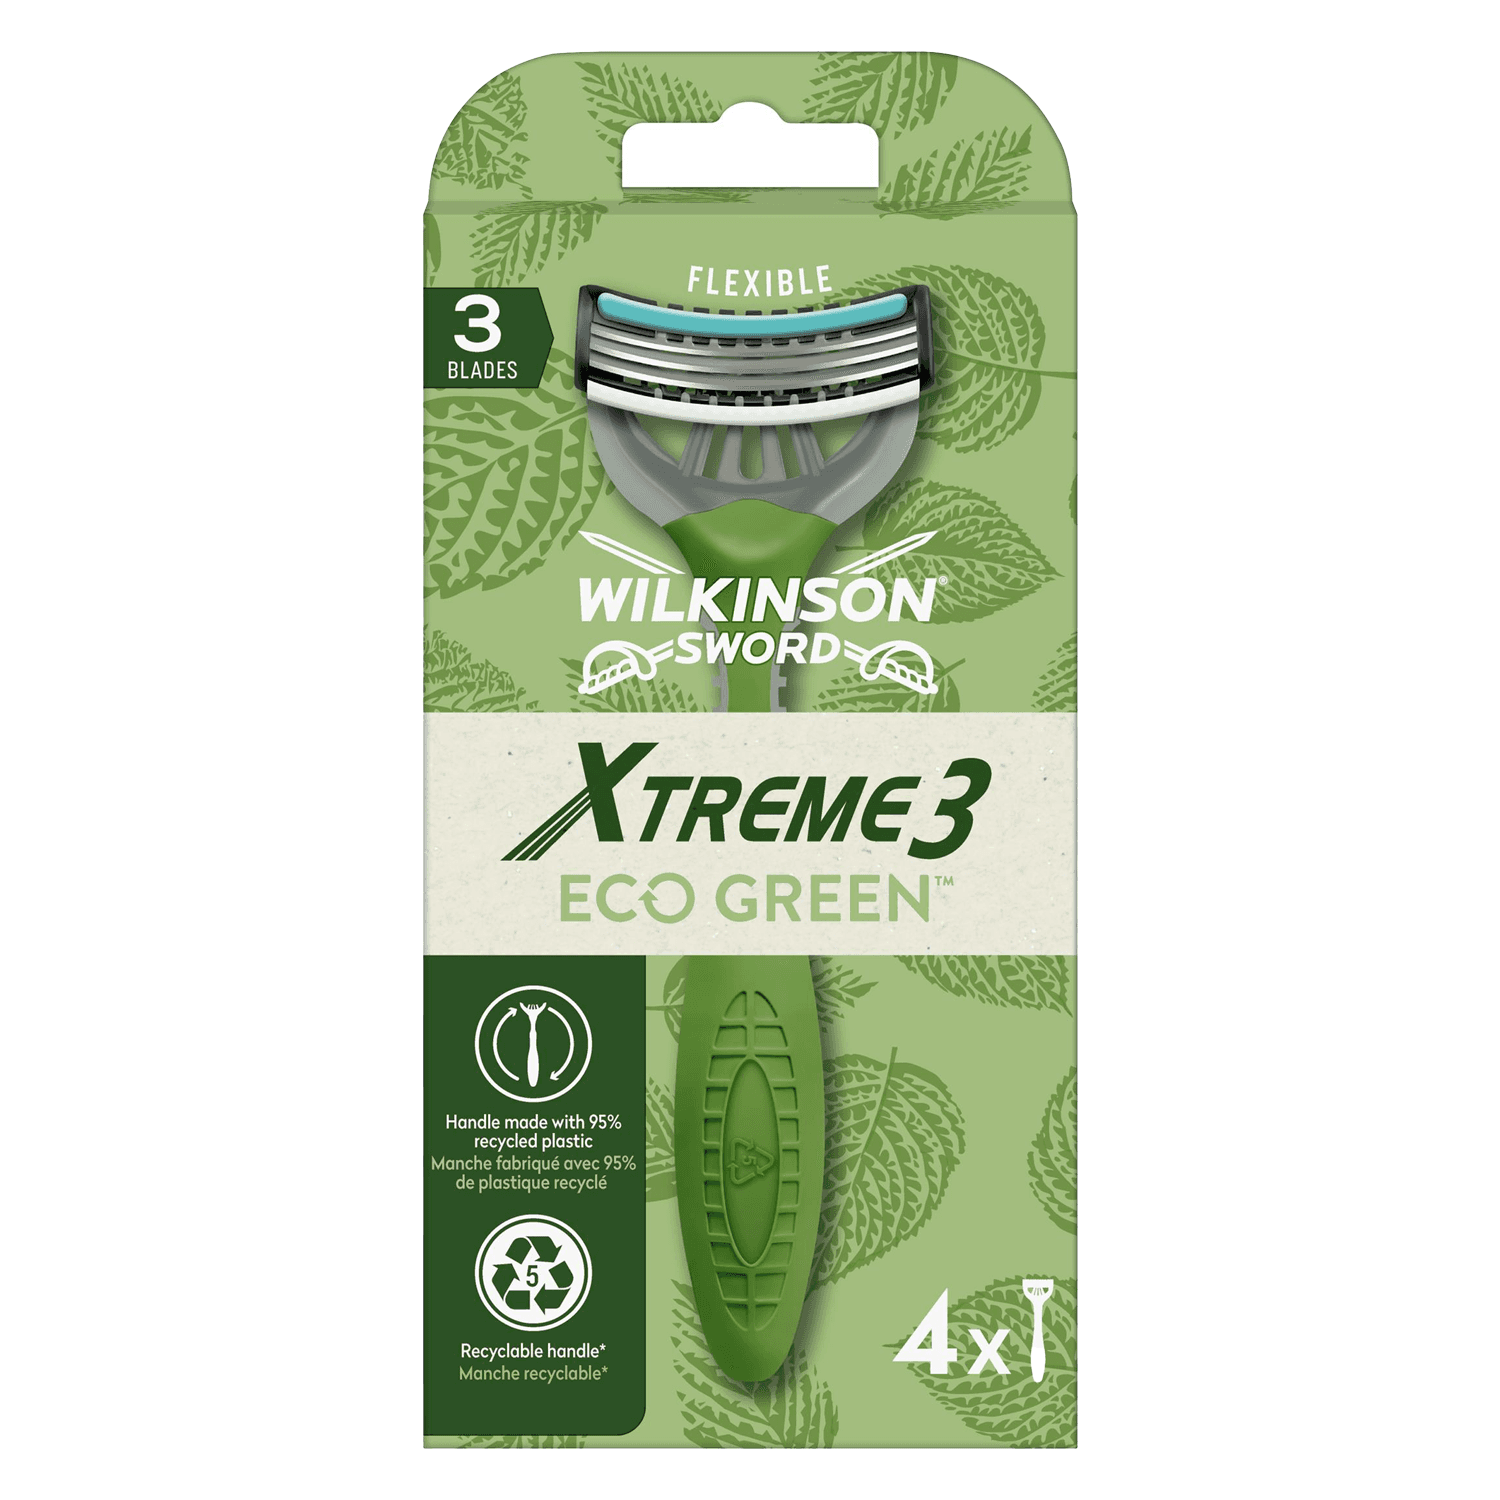 Xtreme - Disposable Razor Eco Green